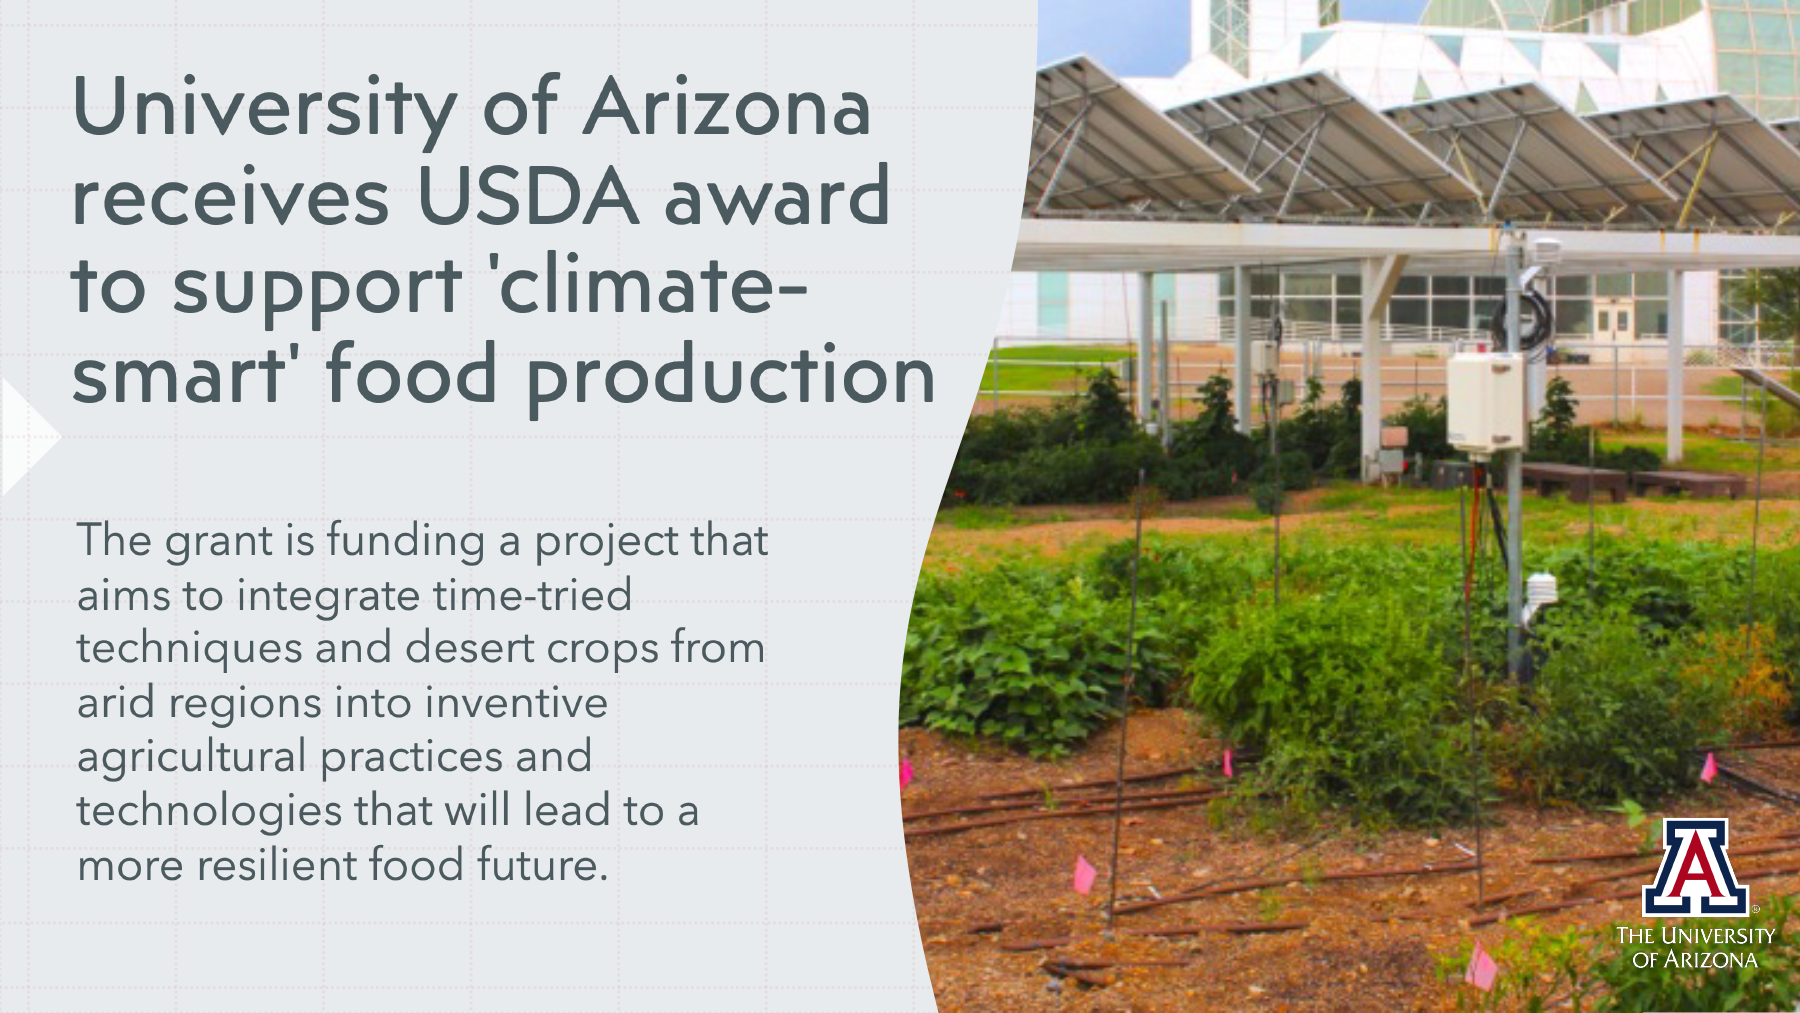 University of Arizona receives USDA award to support 'climate-smart' food production